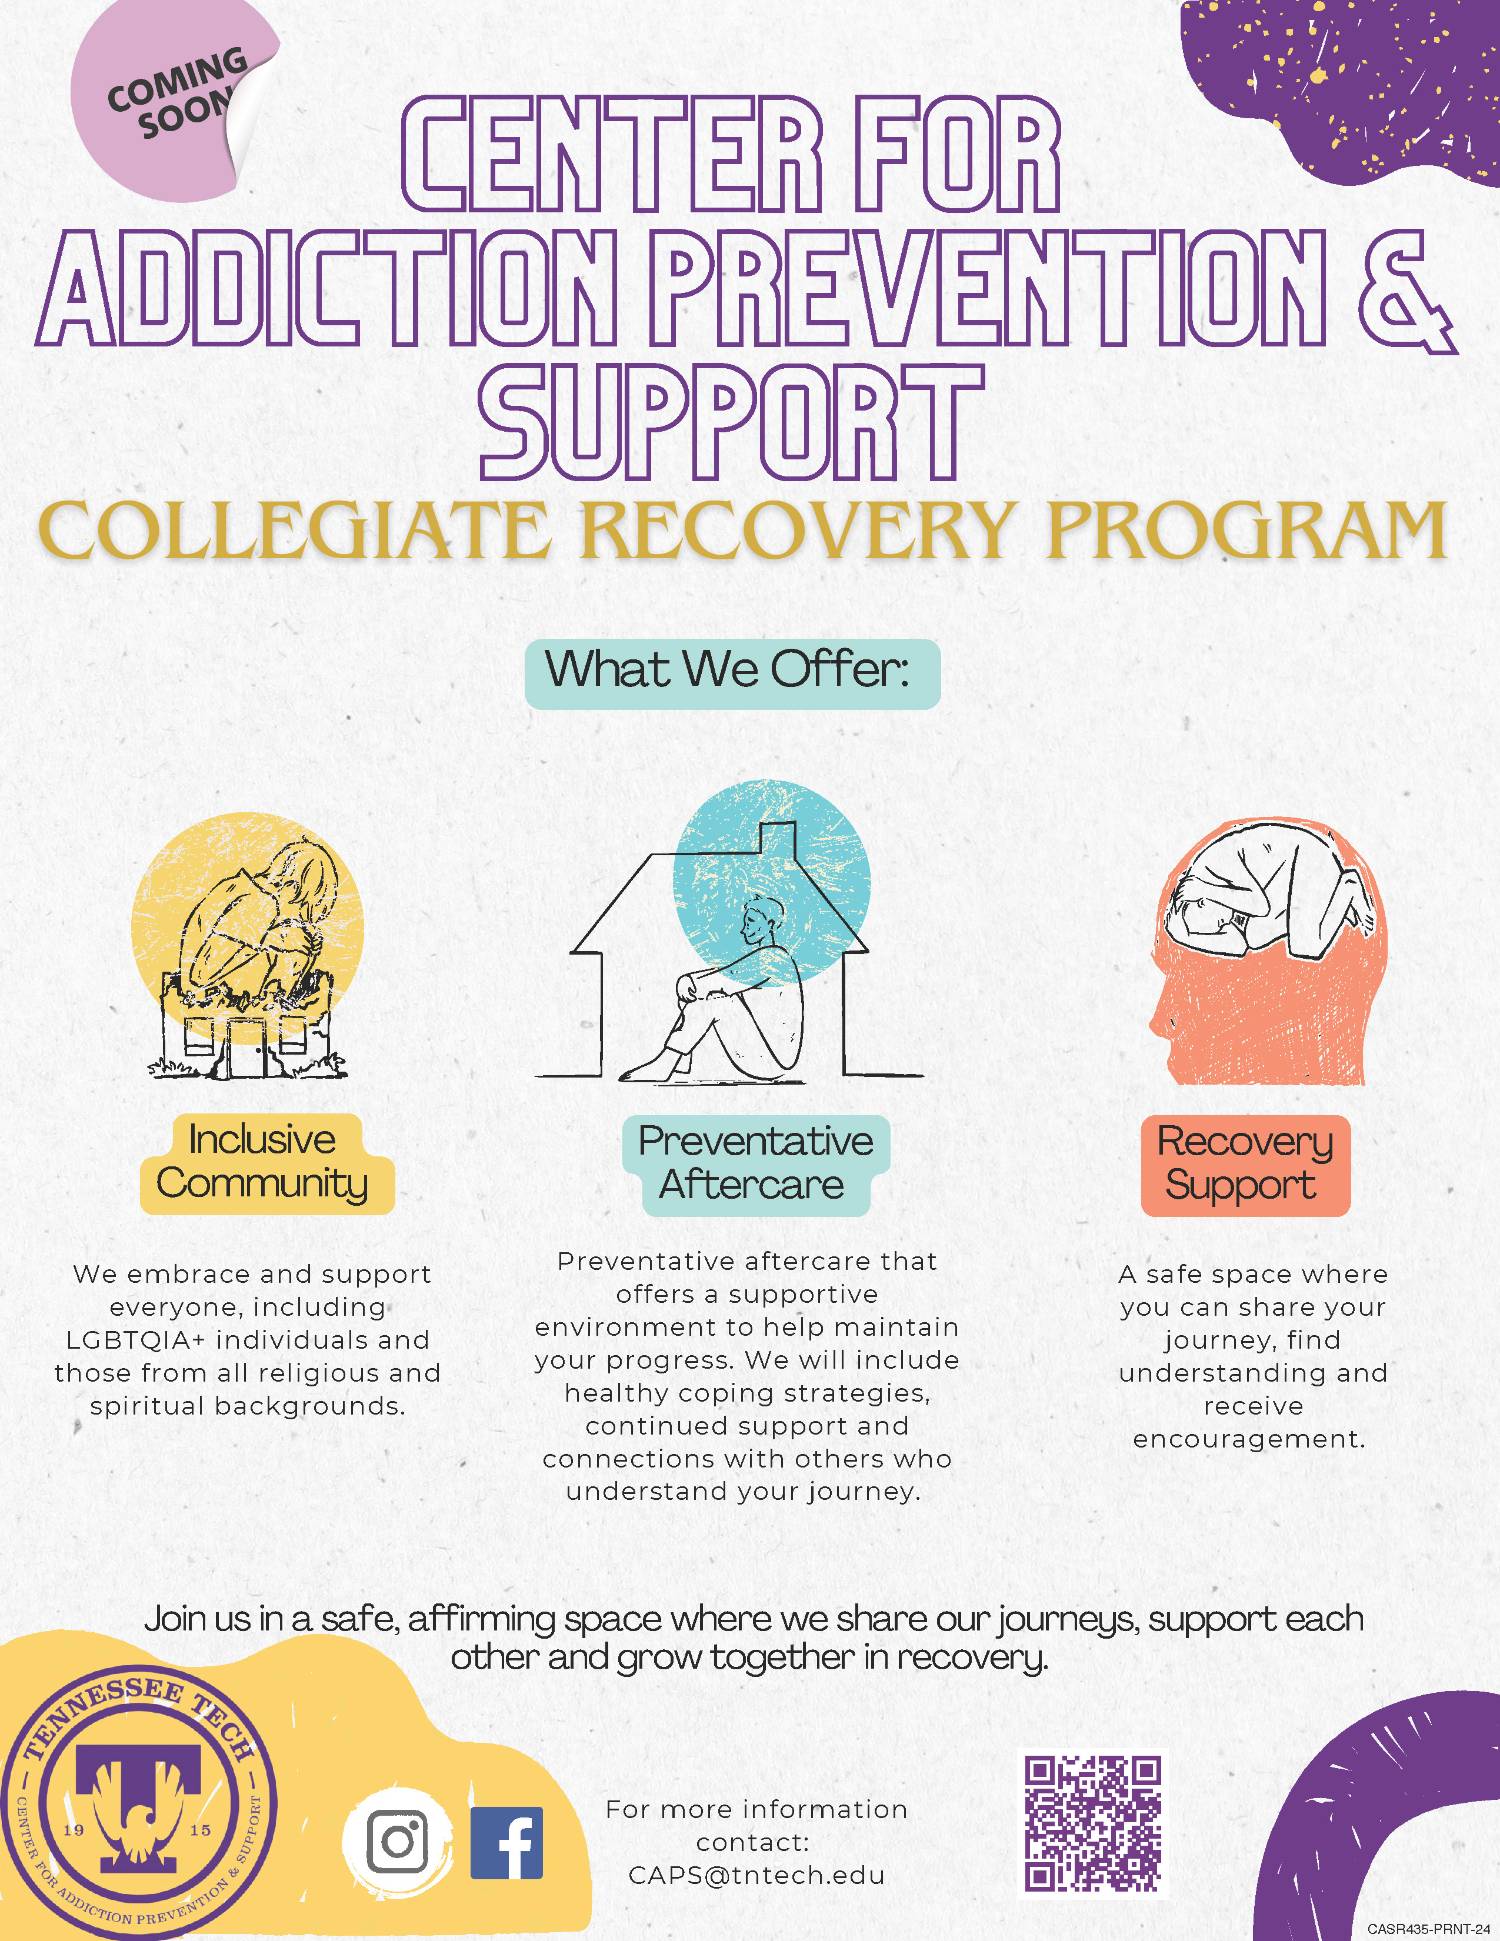 Collegiate Recovery Program flyer